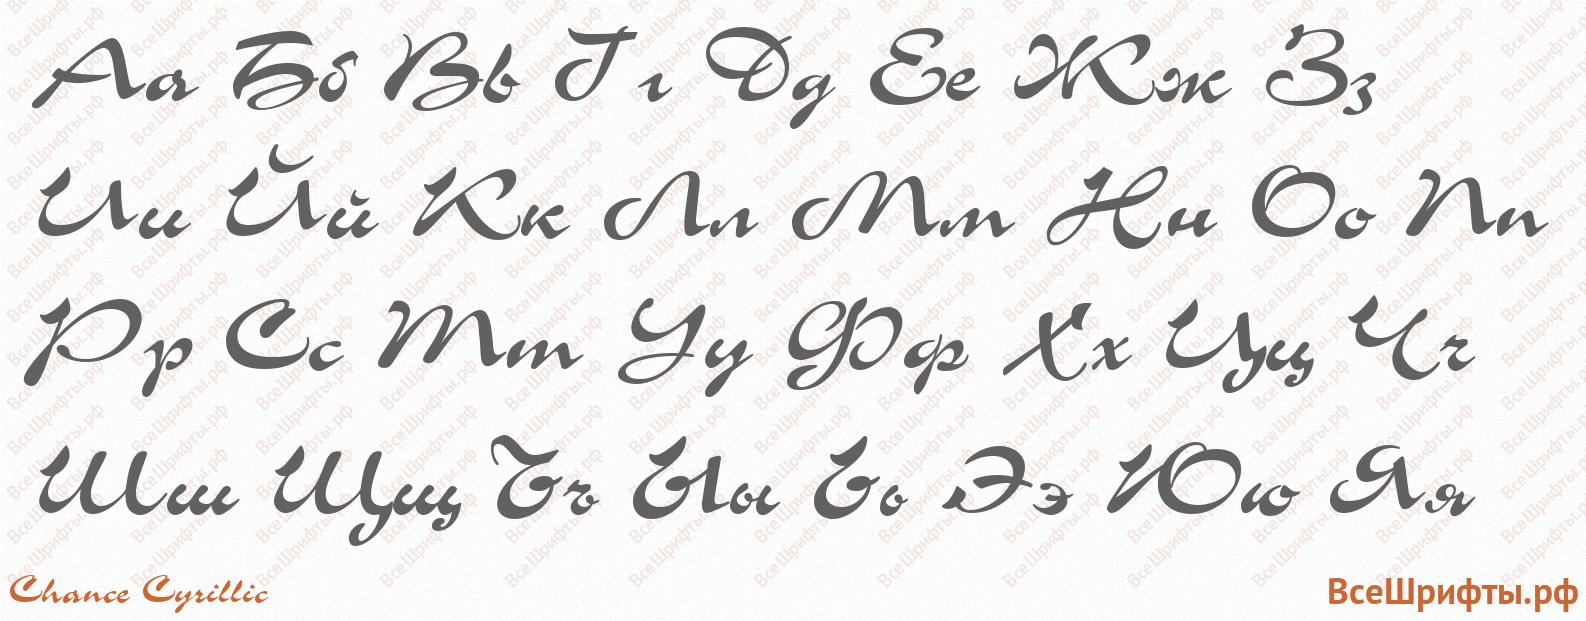 Шрифт Chance Cyrillic с русскими буквами